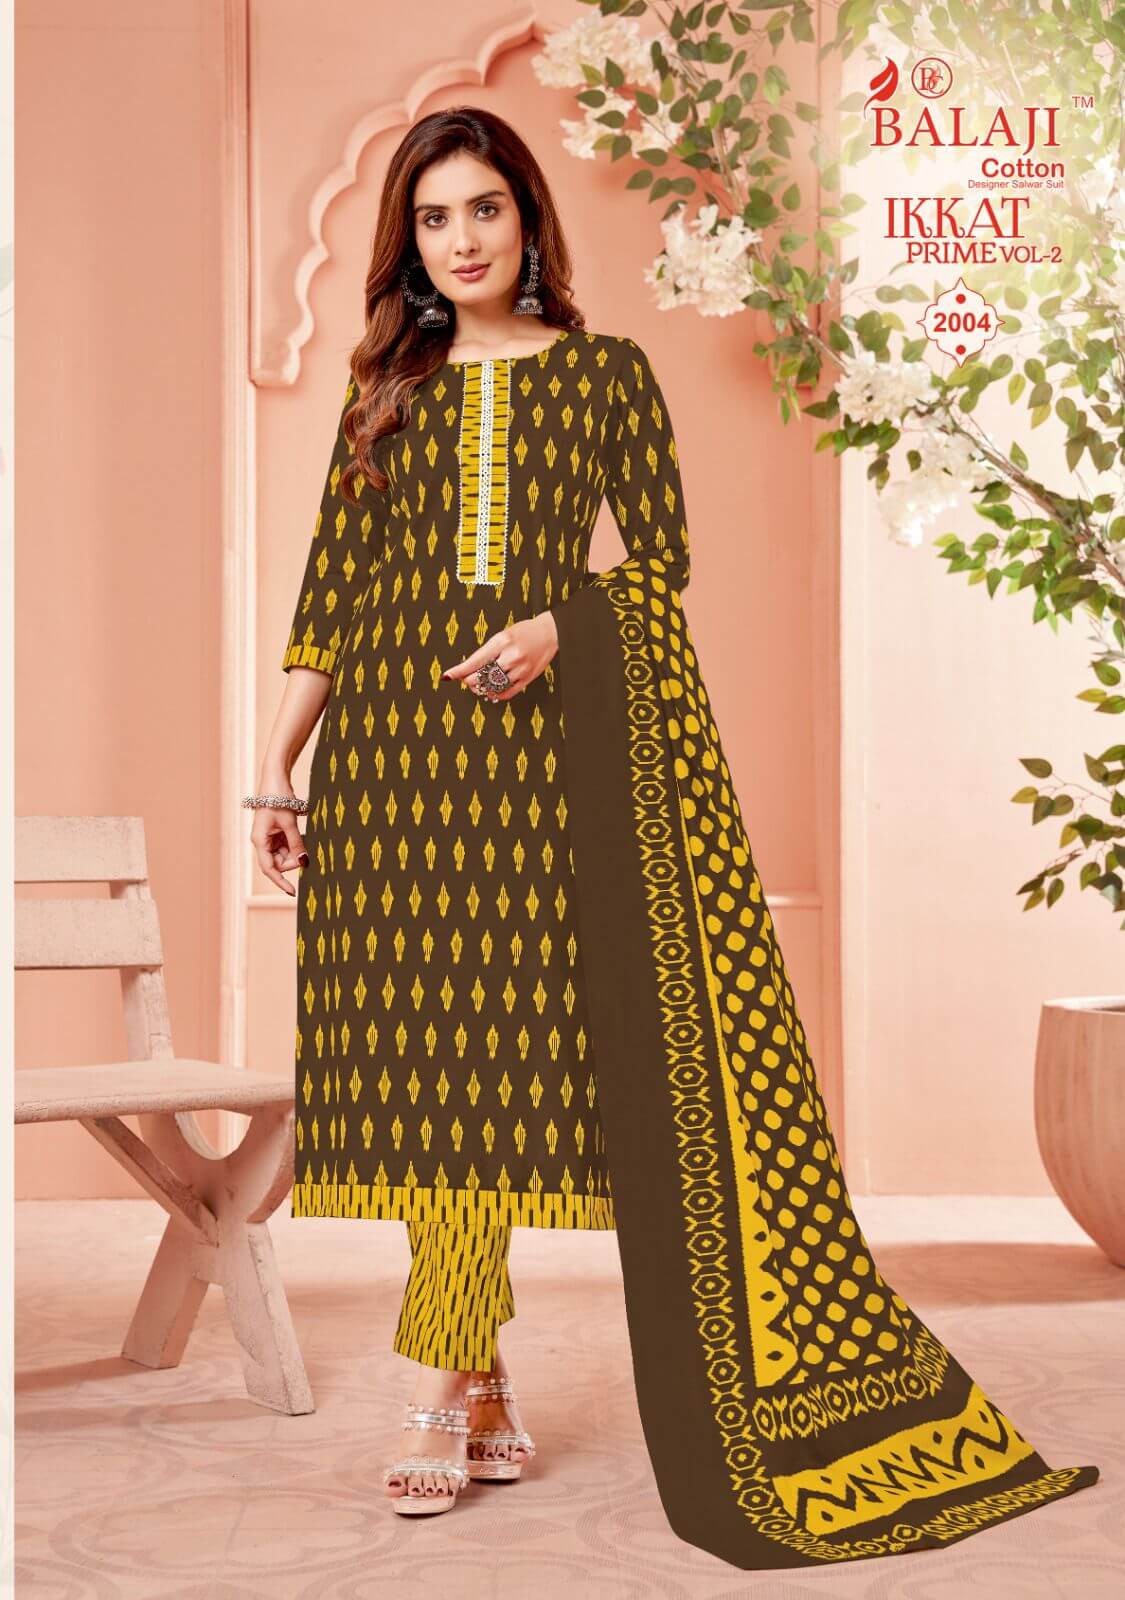 Balaji Cotton Ikkat Prime Vol 2 Readymade Dress Catalog collection 20